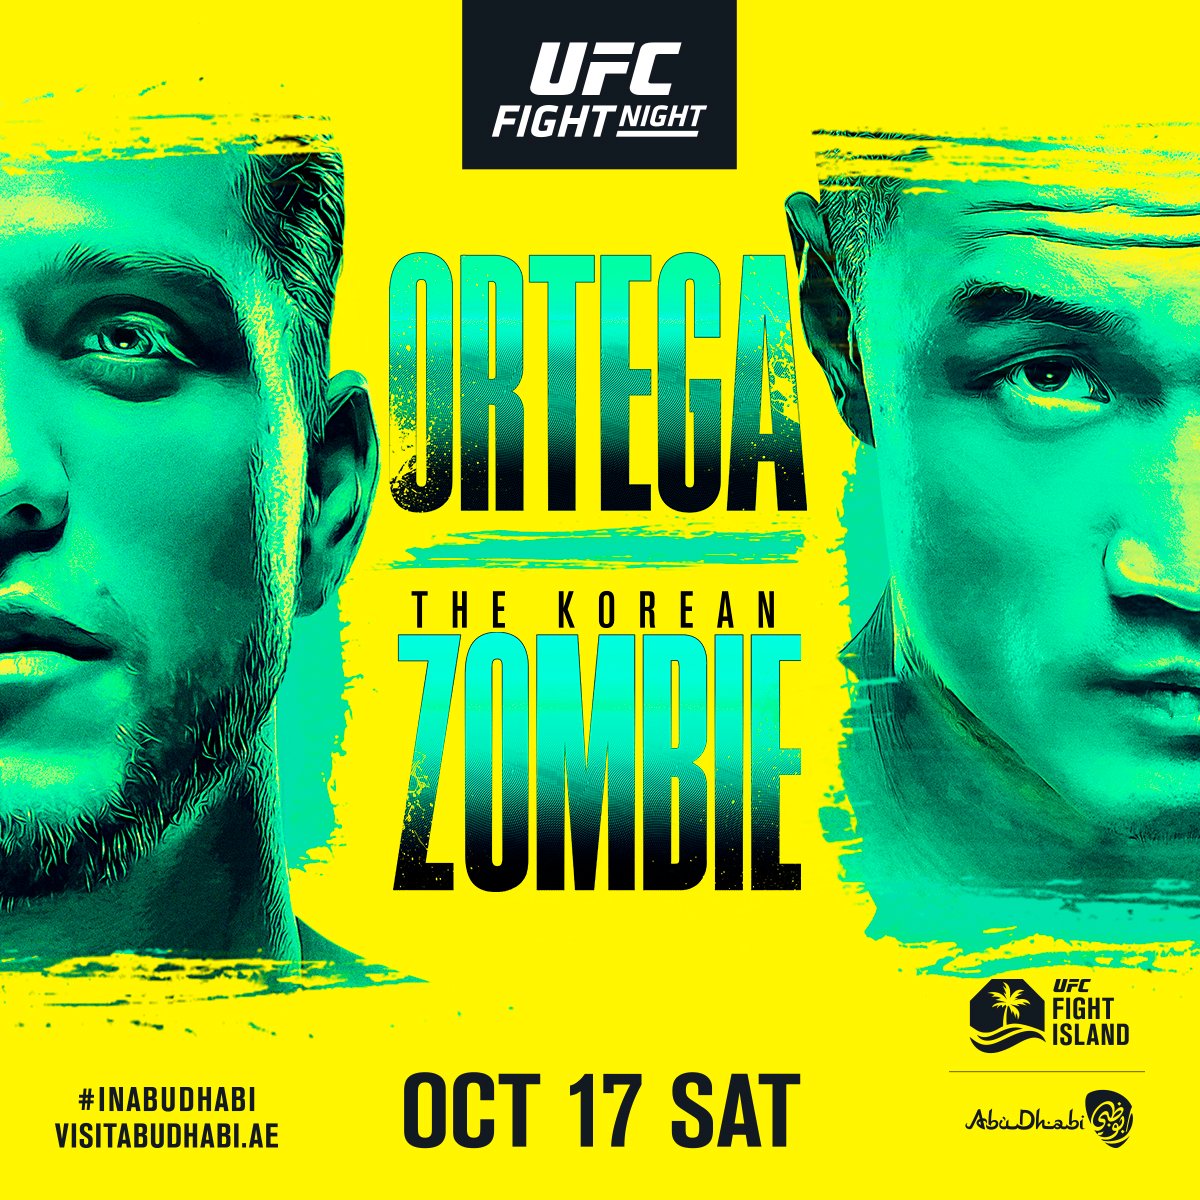 UFC on ESPN+ 38 - Abu Dhabi - Poster et affiche